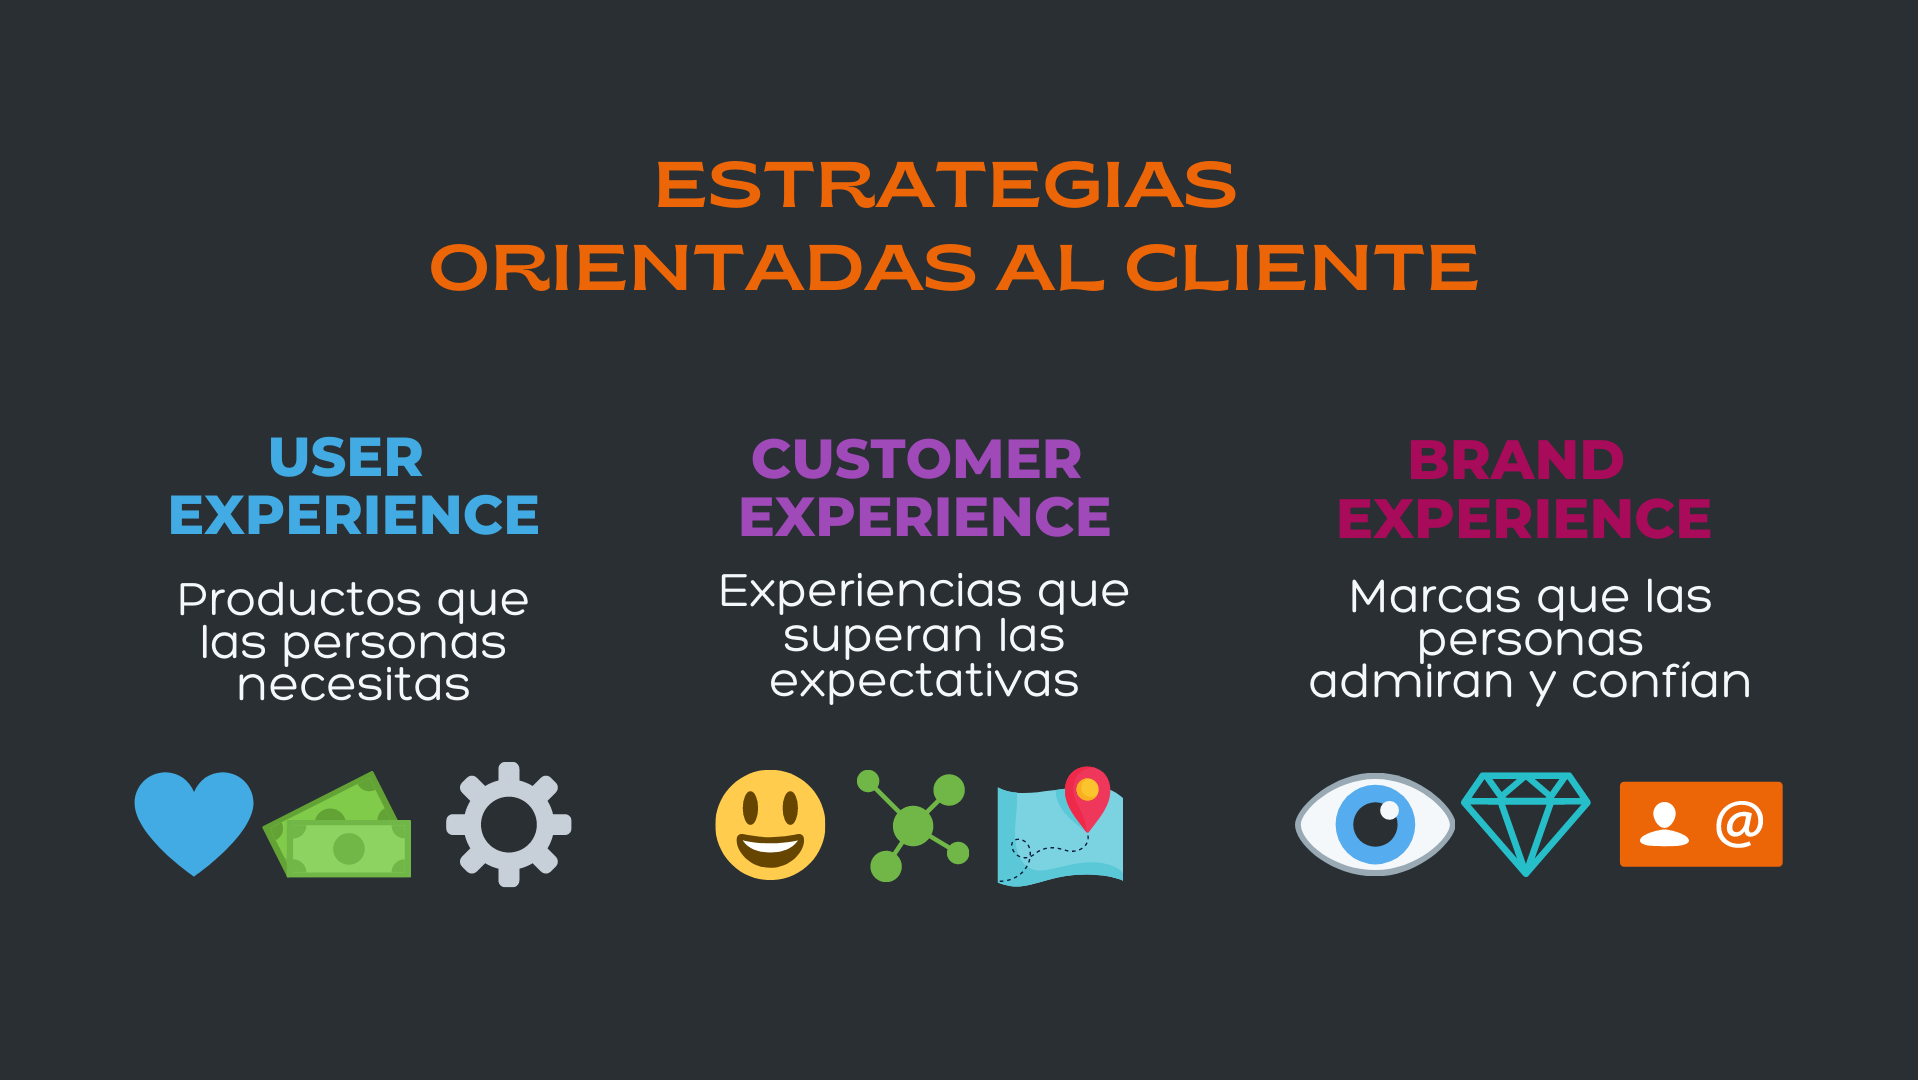 Customer Experience image 1